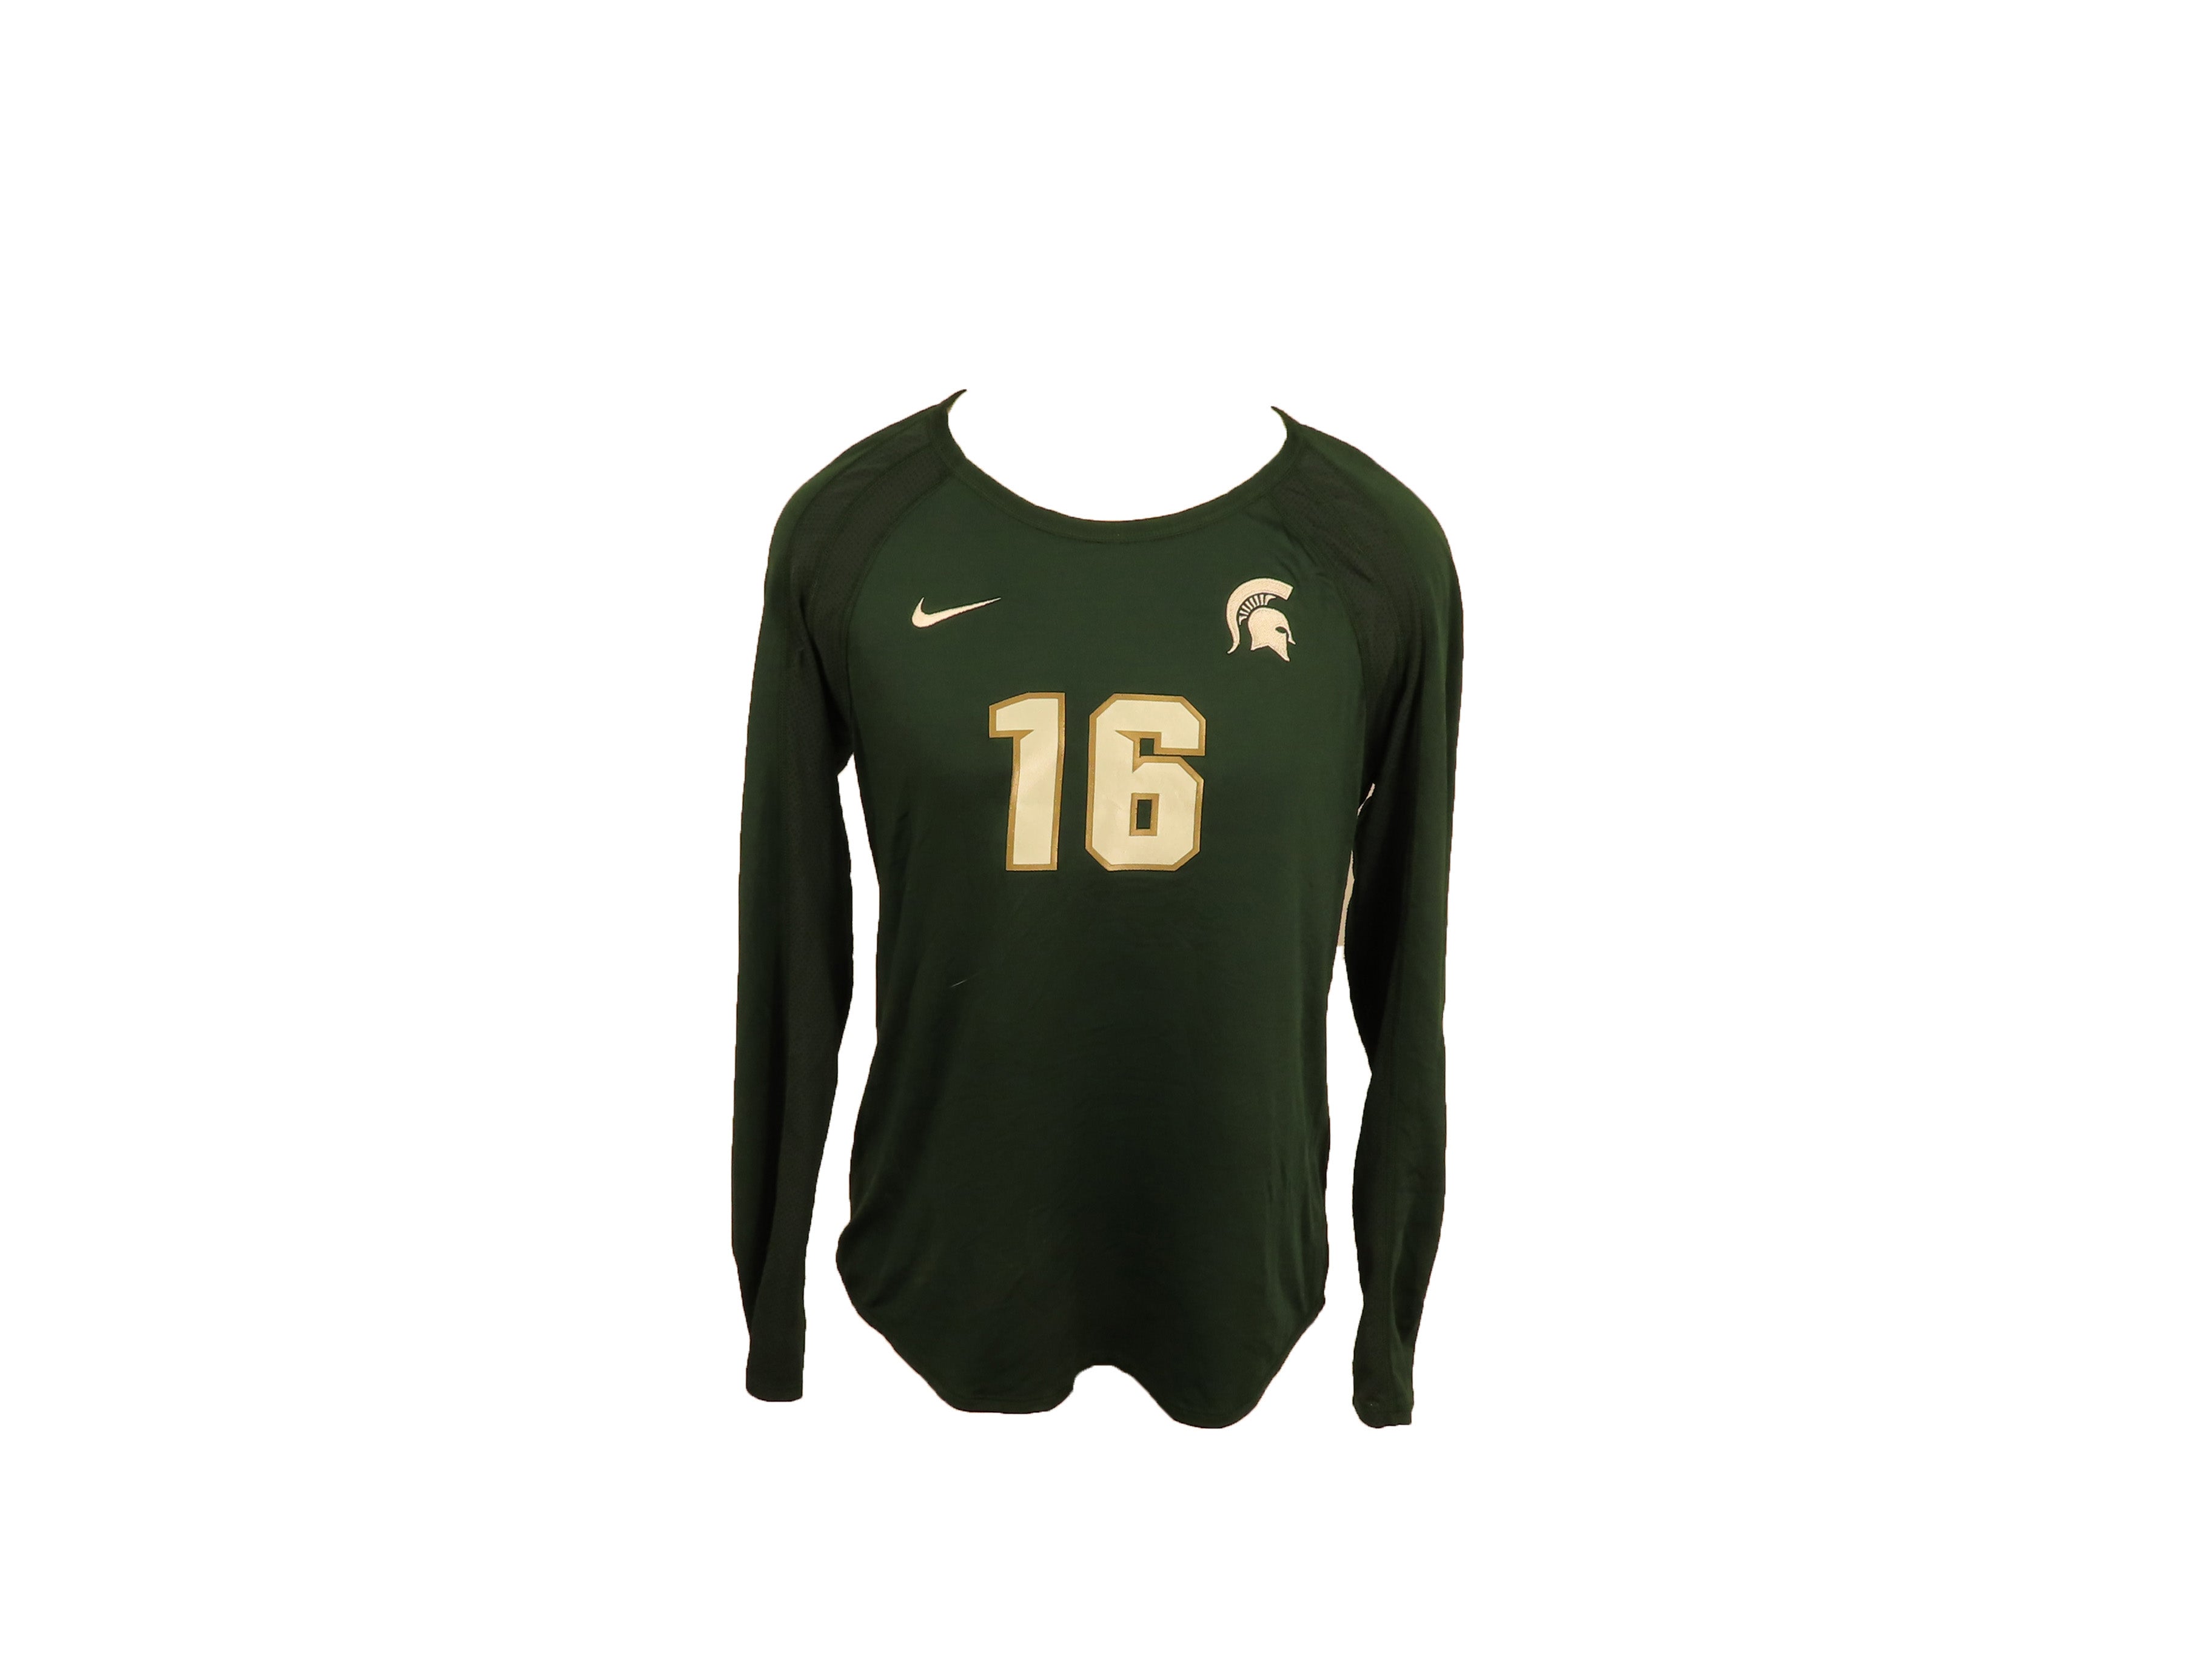 Nike Green Long Sleeve MSU Volleyball Jersey #16 Women's Size XL